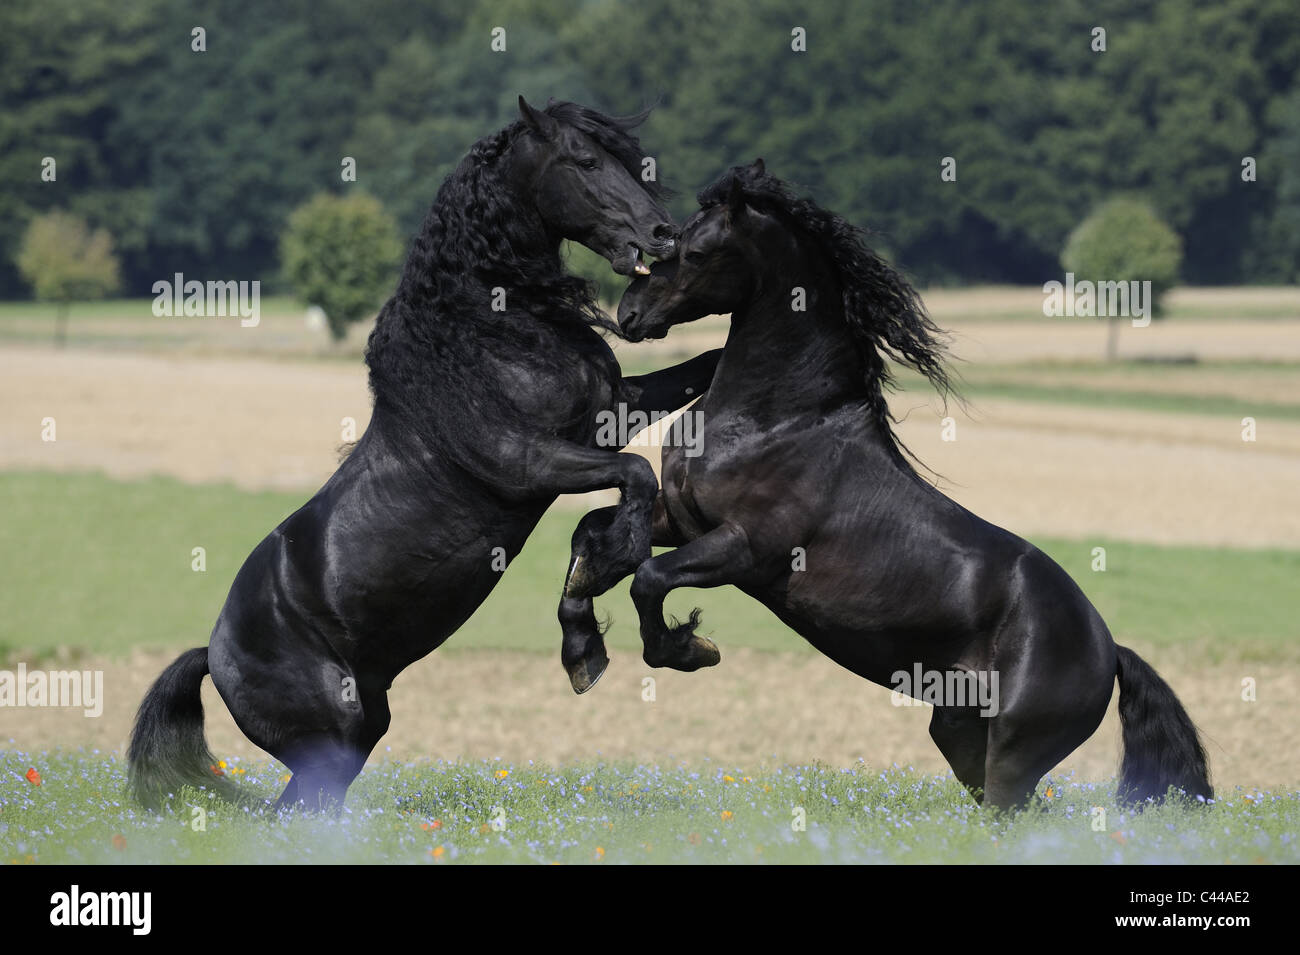 Friesian Horse Equus Ferus Caballus Stallions Fighting Stock Photo Alamy